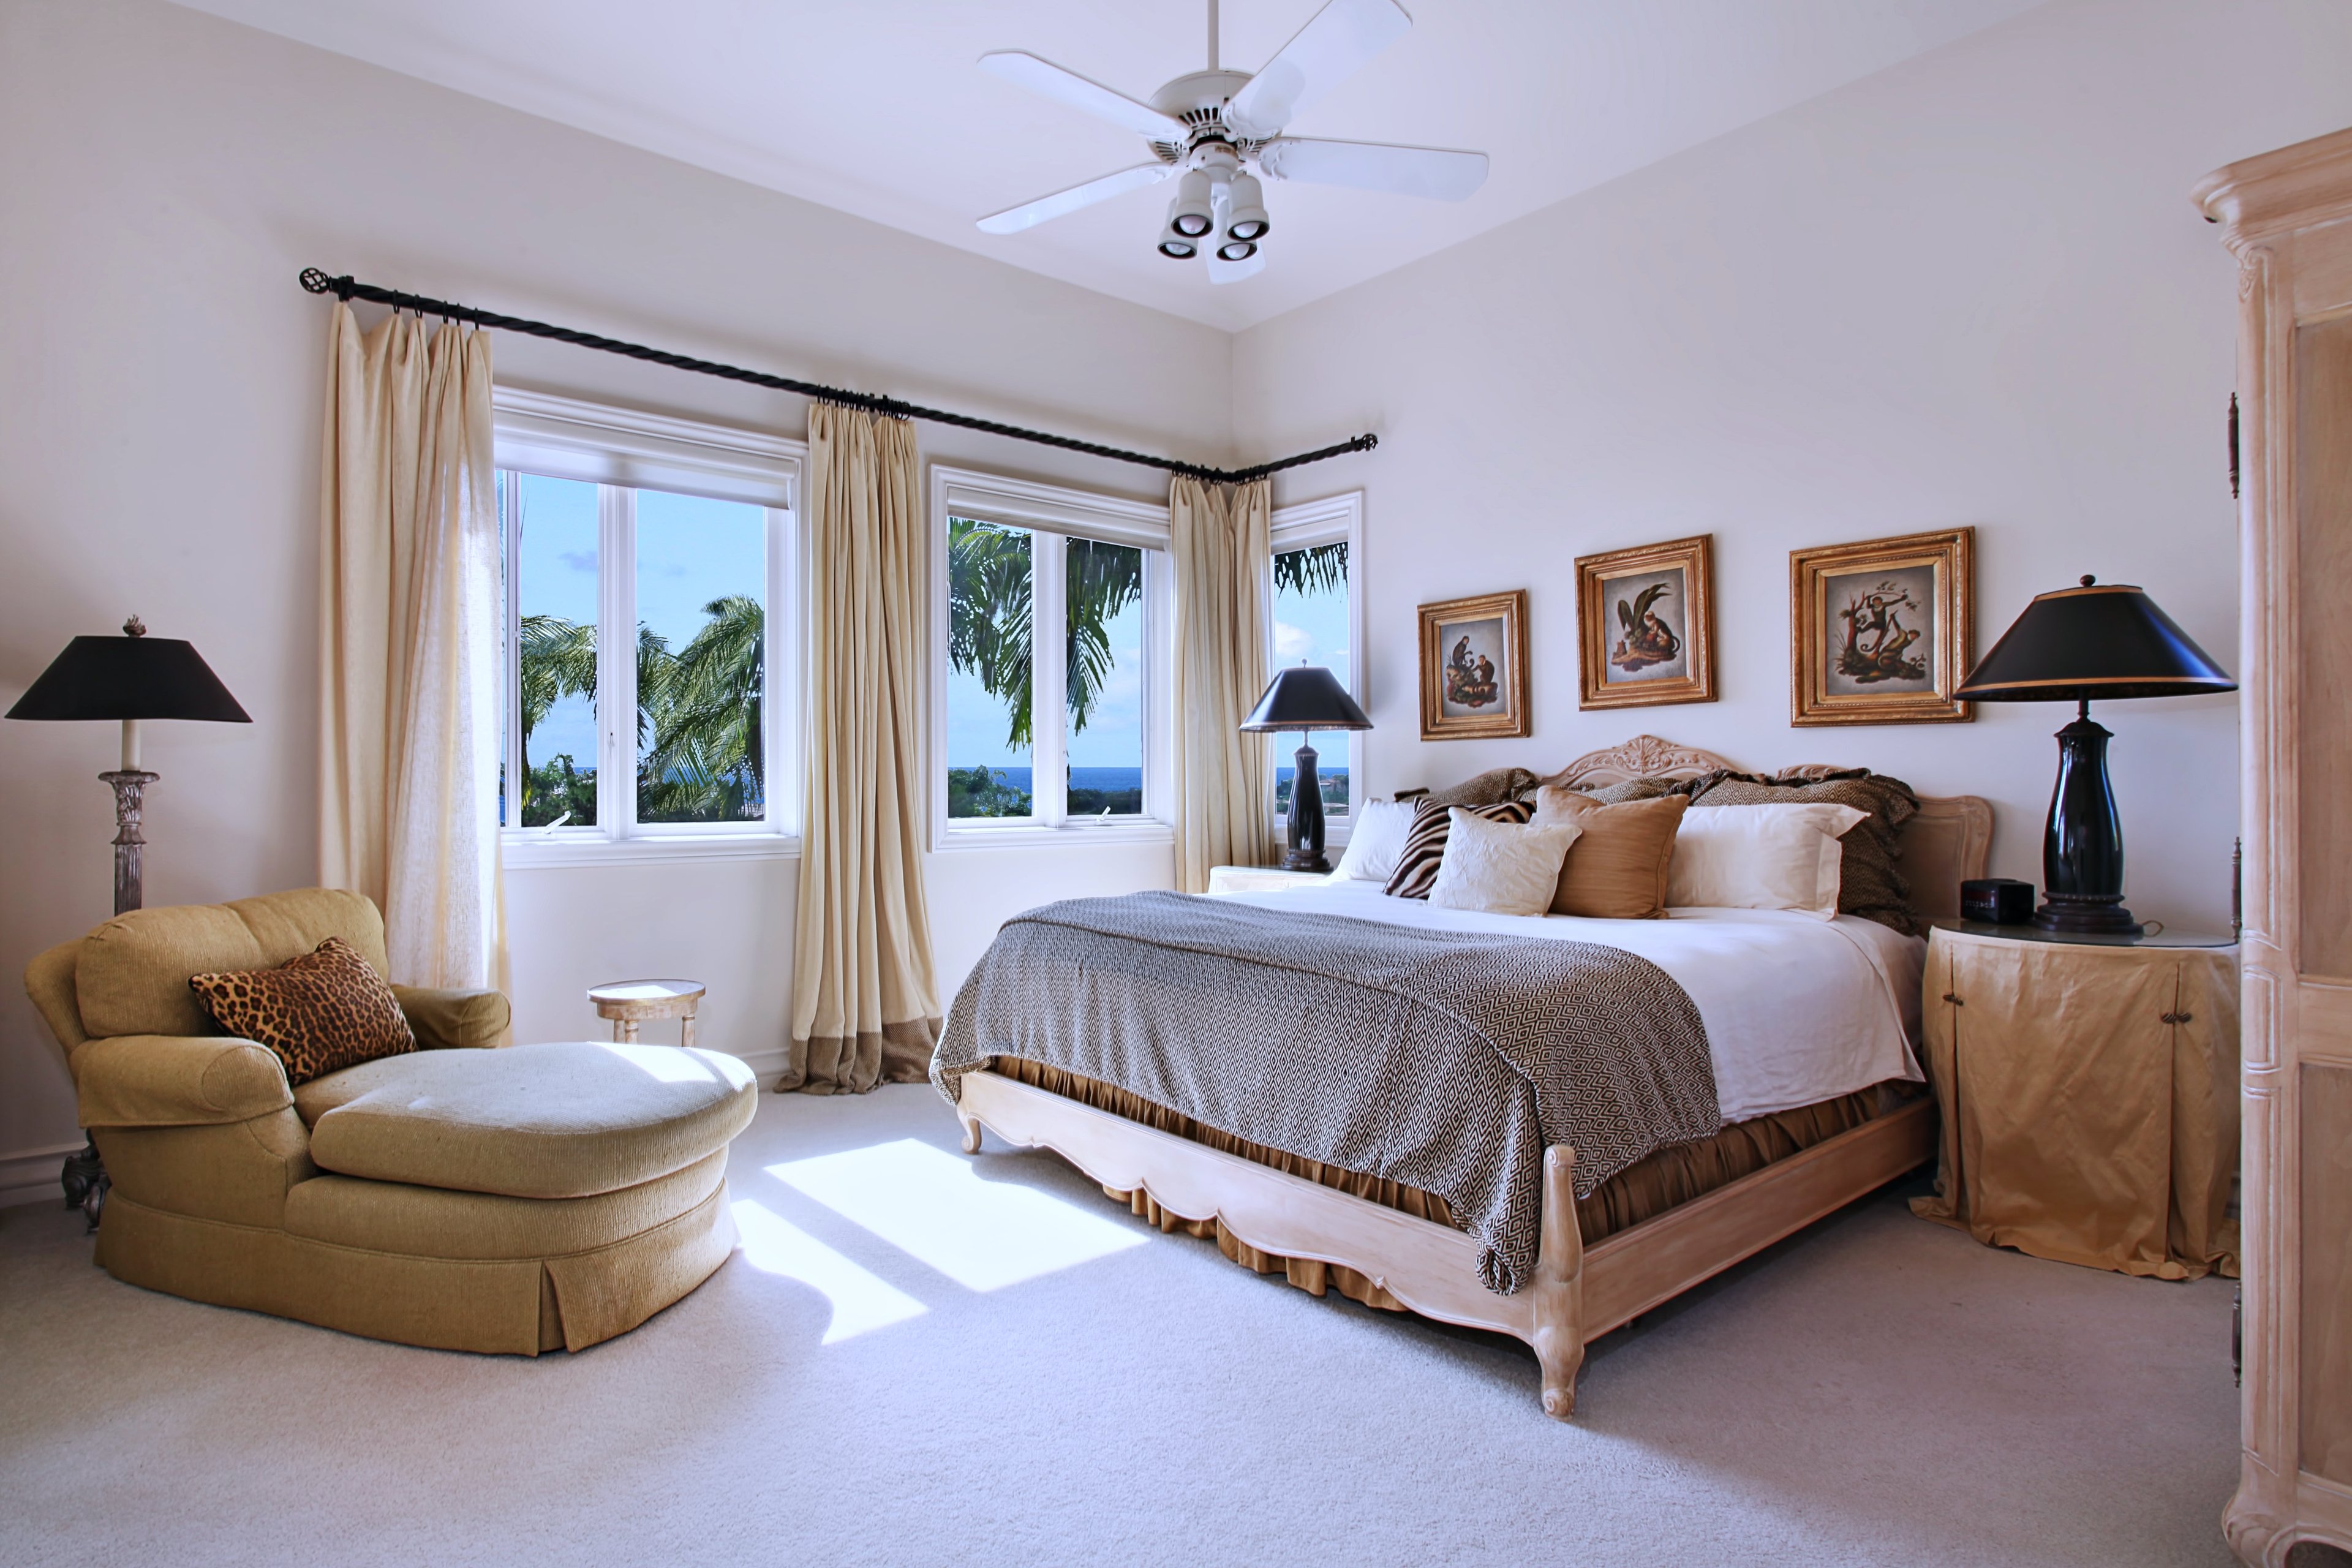 beauty, Bedroom, Design, Happy, House, Interior, Luxury, Relax, Sofa, Style, Villa, Windows, Beach Wallpaper